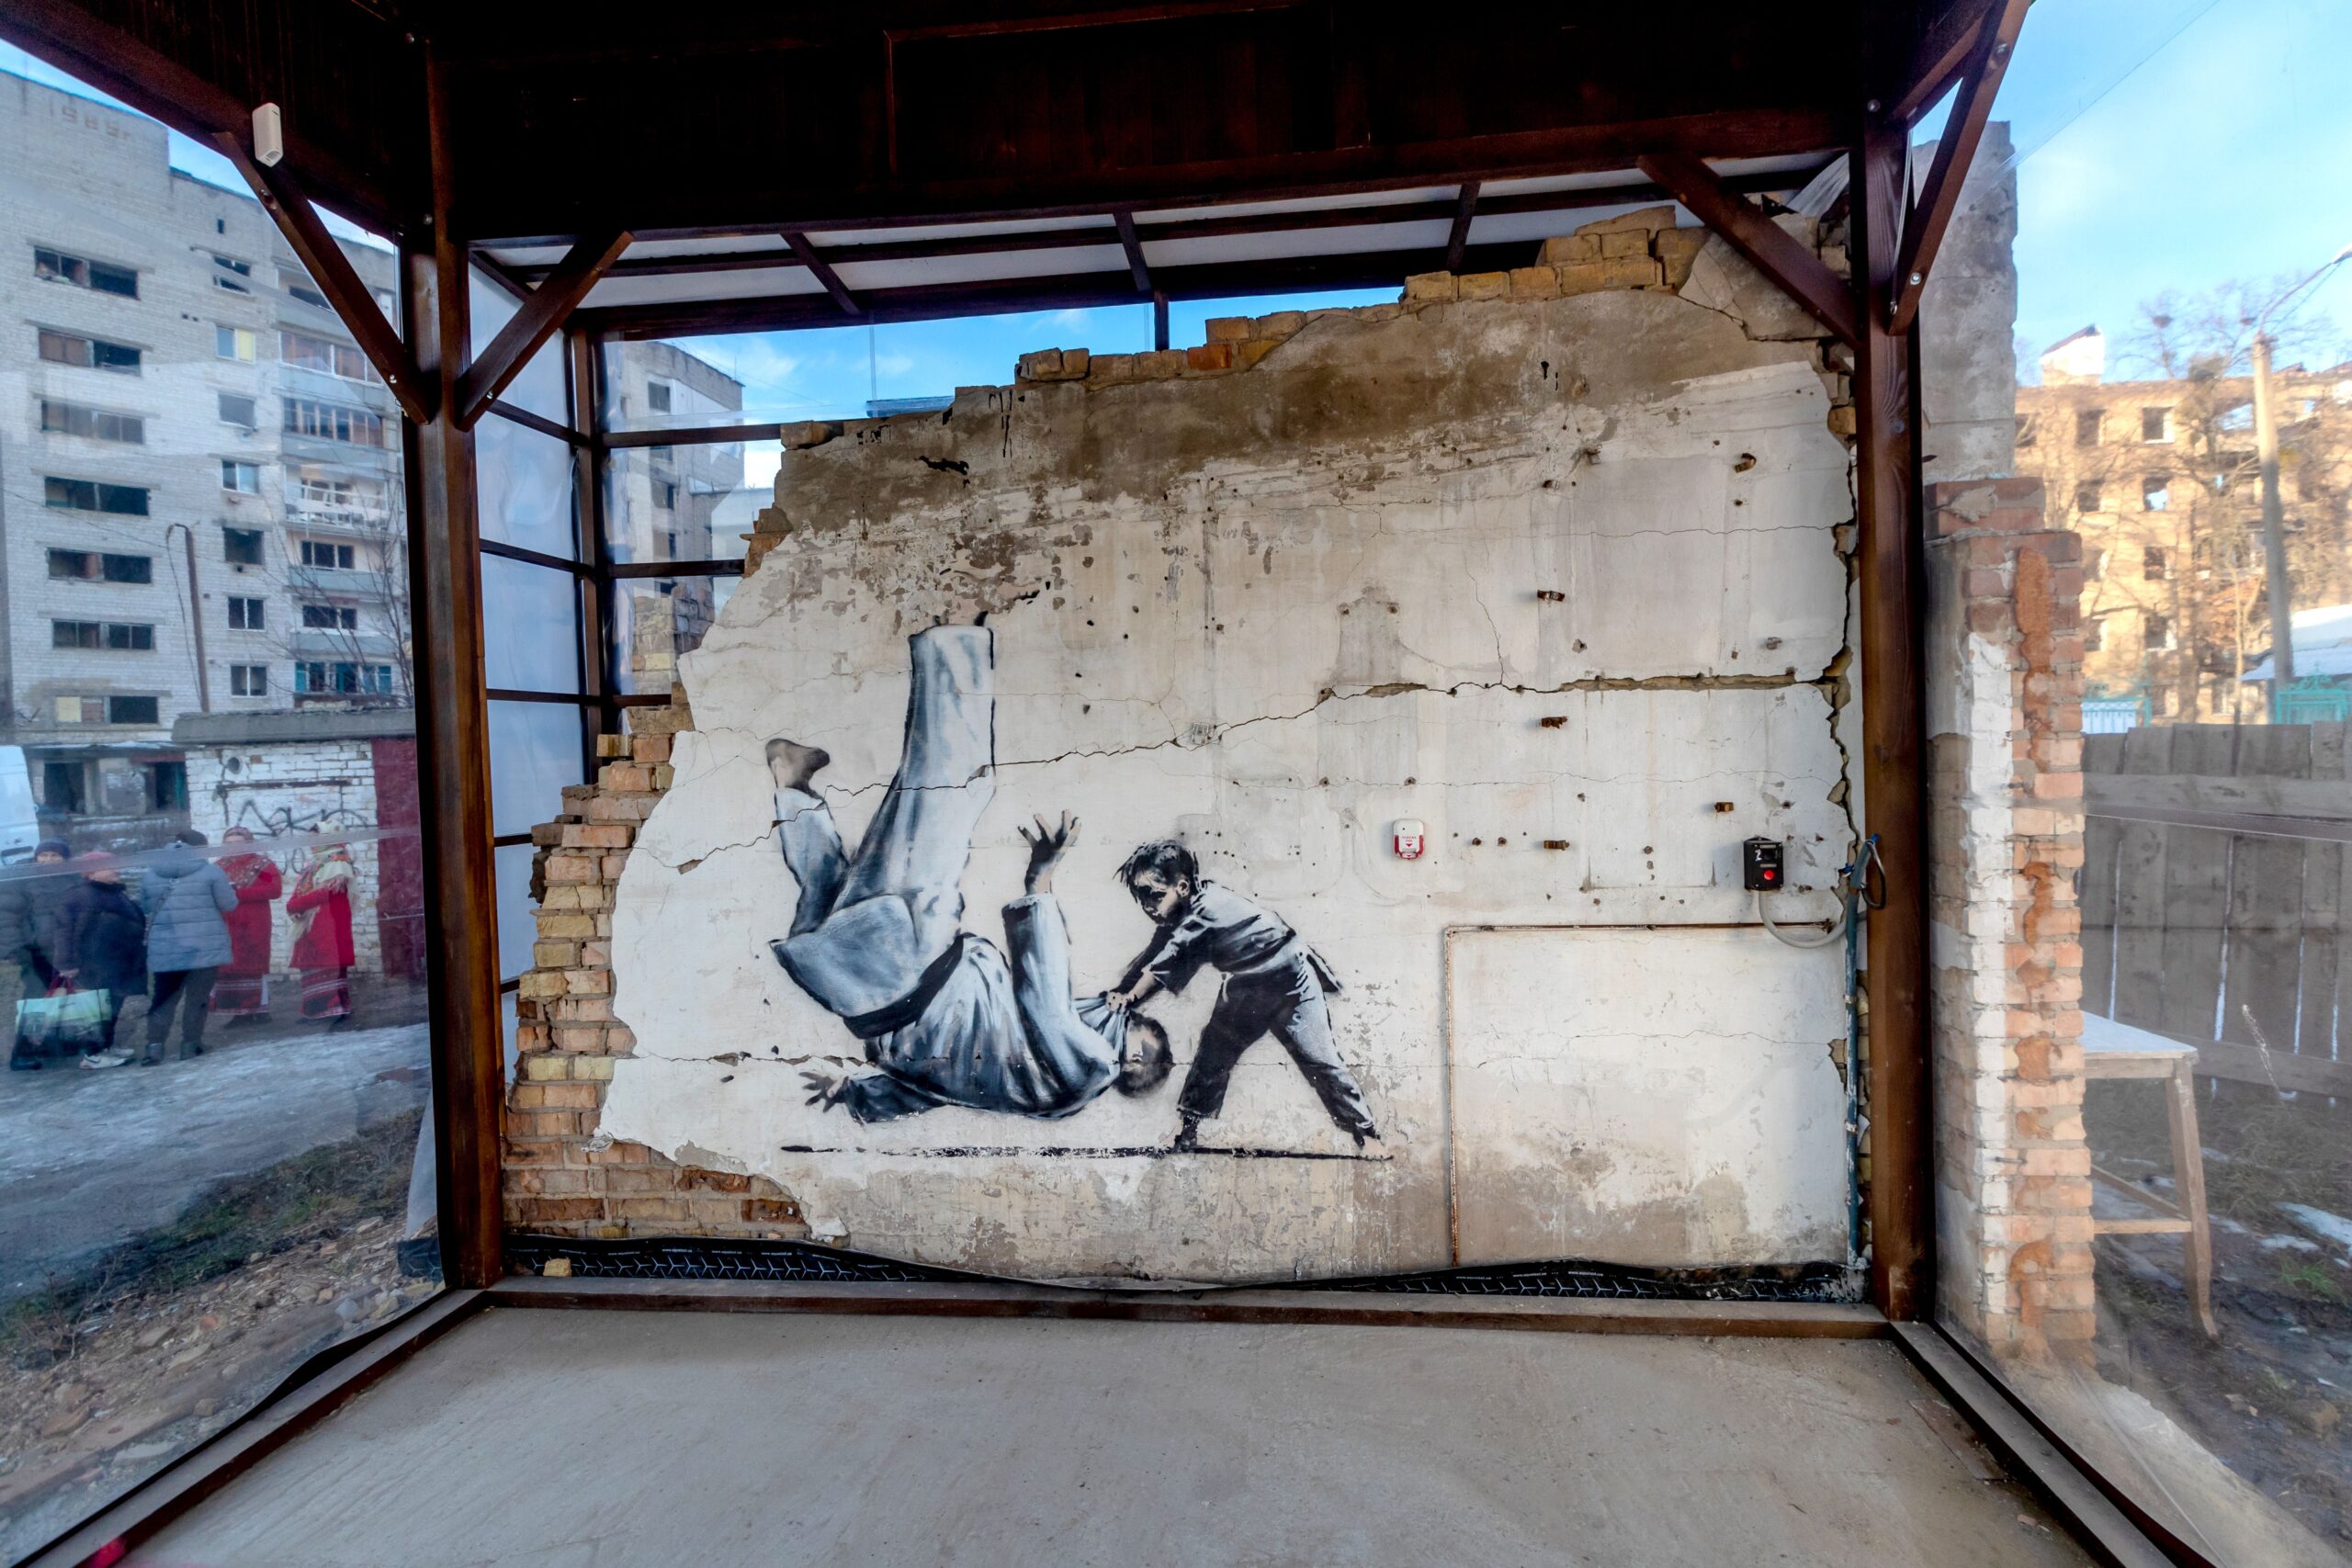 The Boy Who Defeats an Adult Judoka  by Banksy pictured in Borodianka, Kyiv region, northern Ukraine